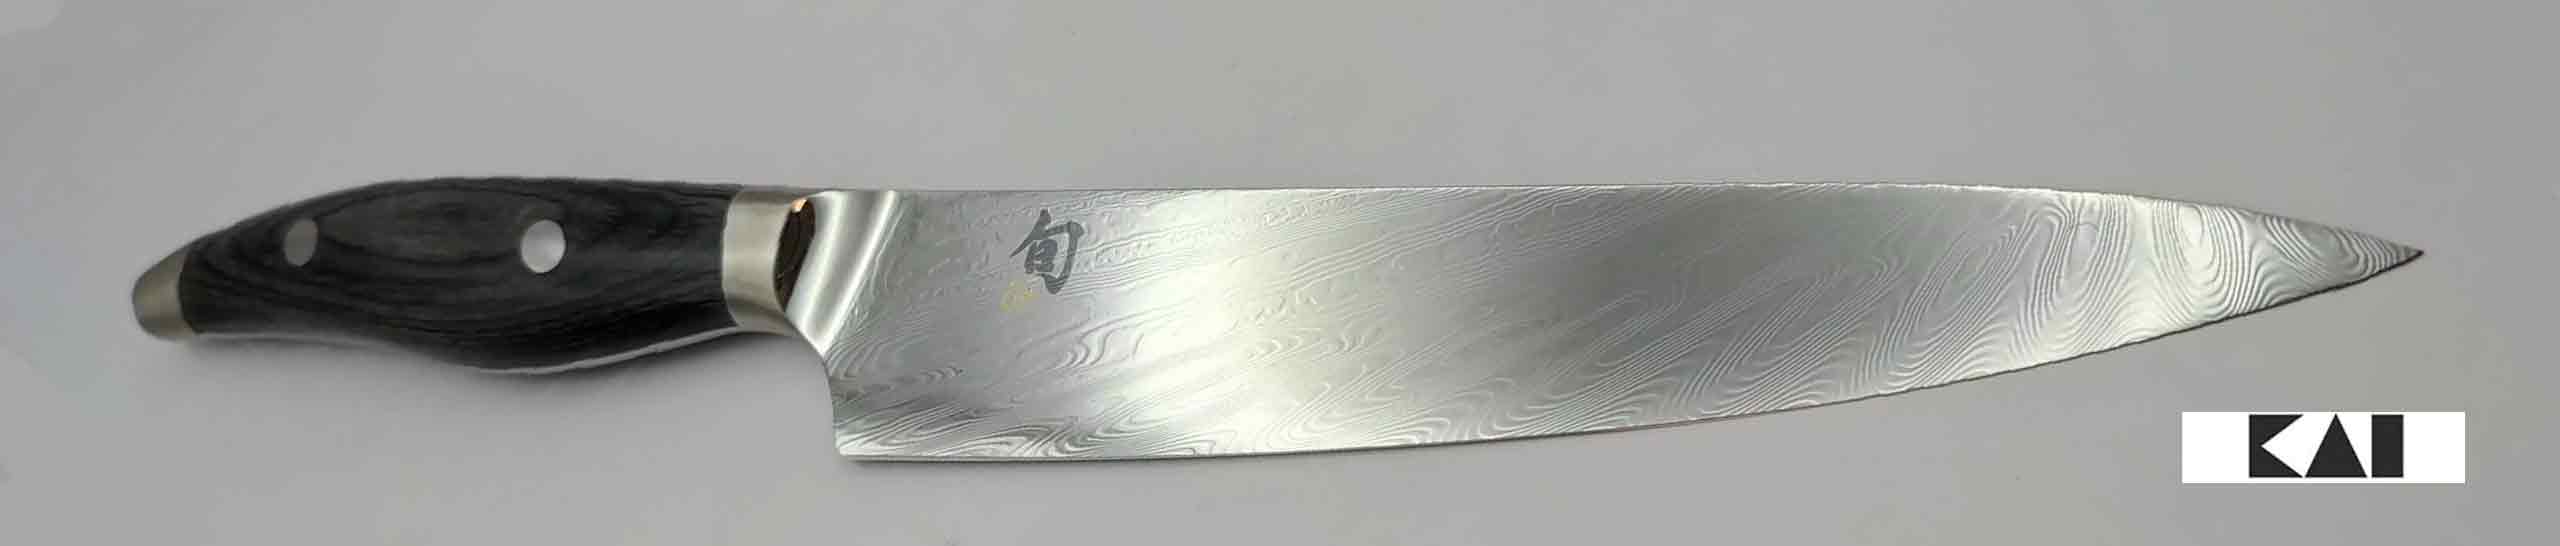 Couteau japonais utilitaire Kai Shun Nagare